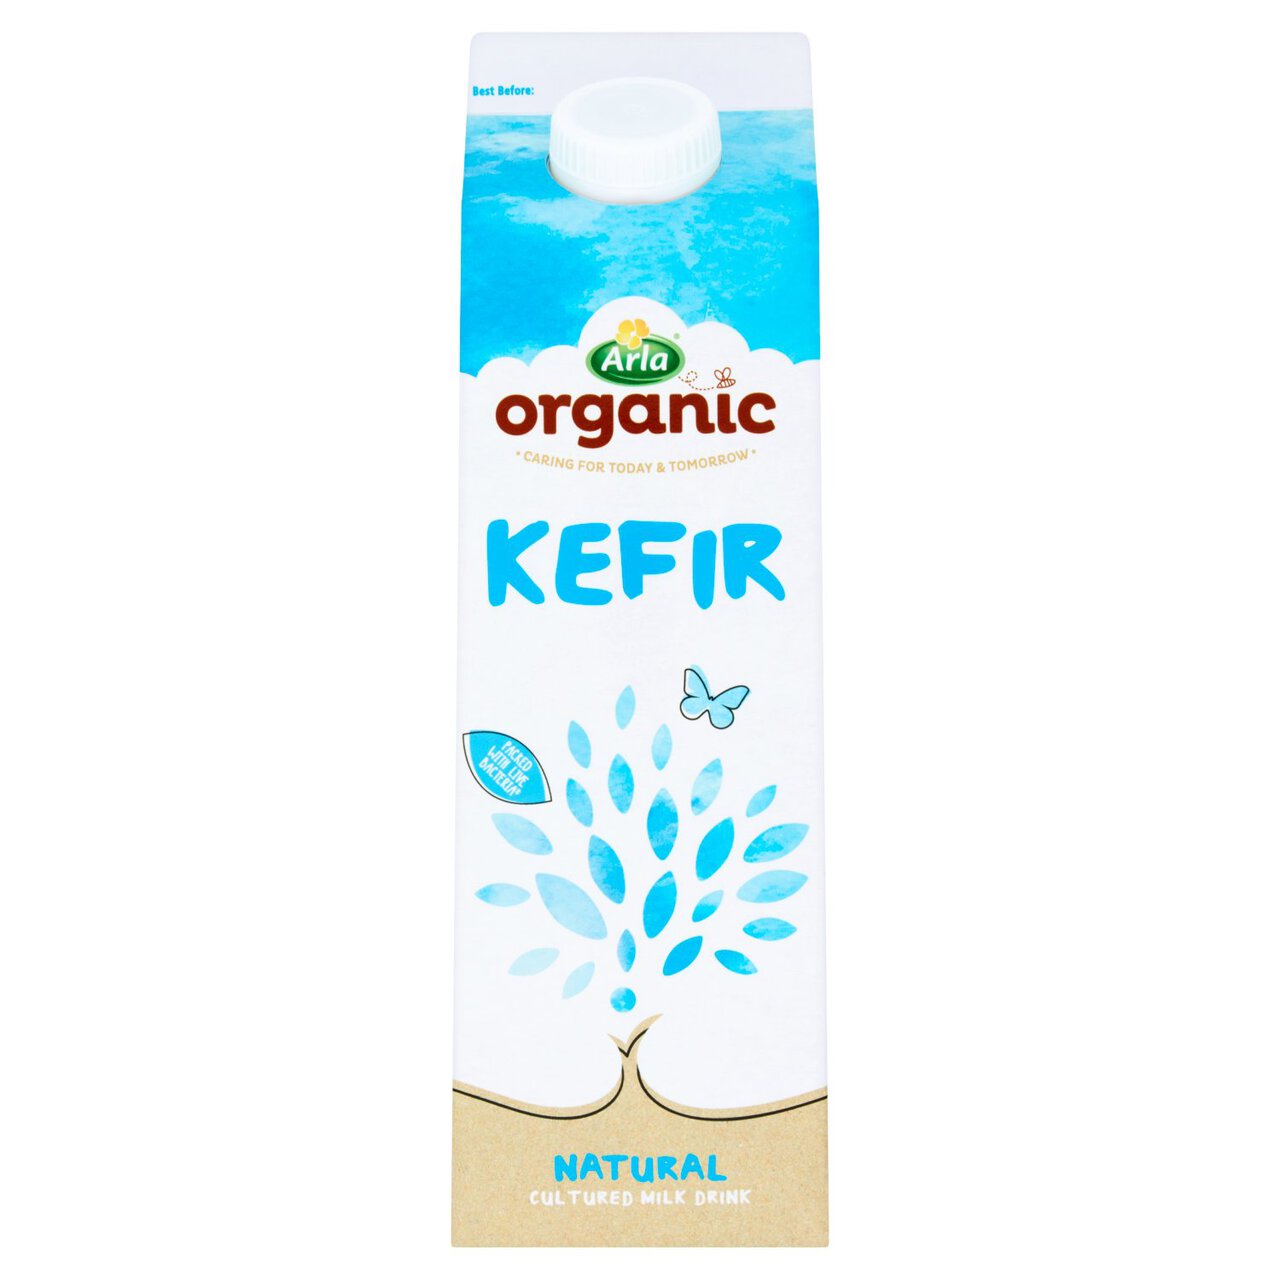 Arla Organic Free Range Kefir Natural Cultured Milk Drink 1l